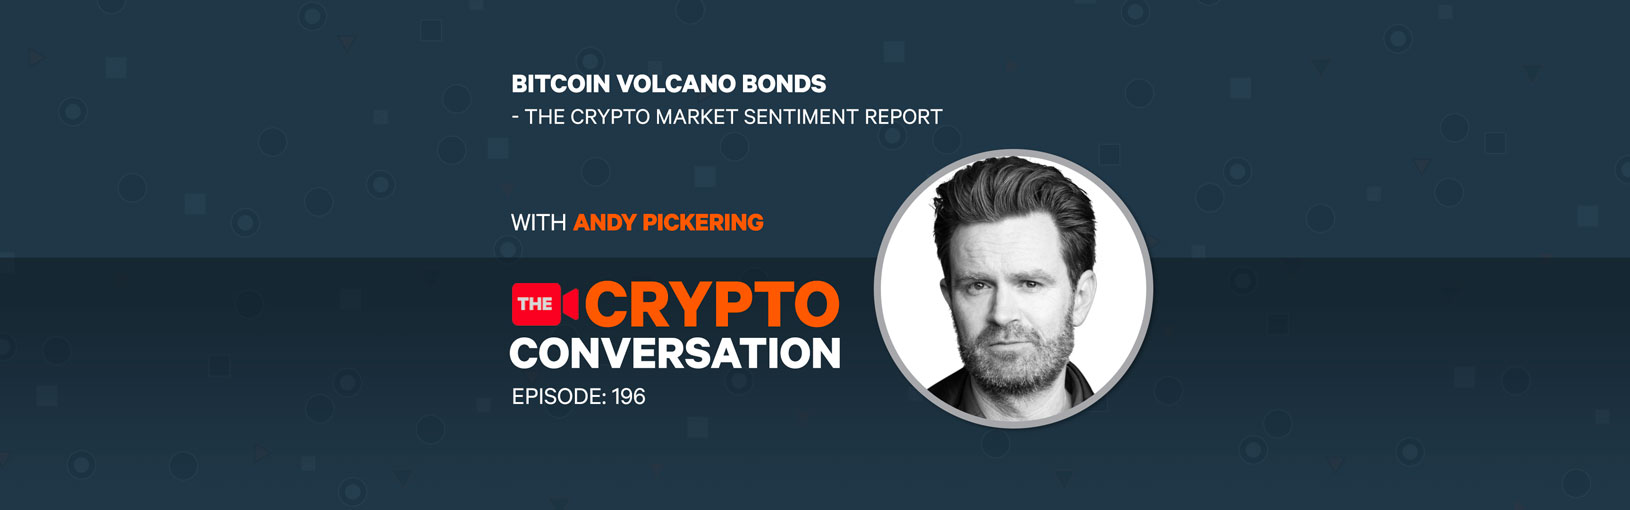 Bitcoin Volcano bonds – A Crypto Market Sentiment Report